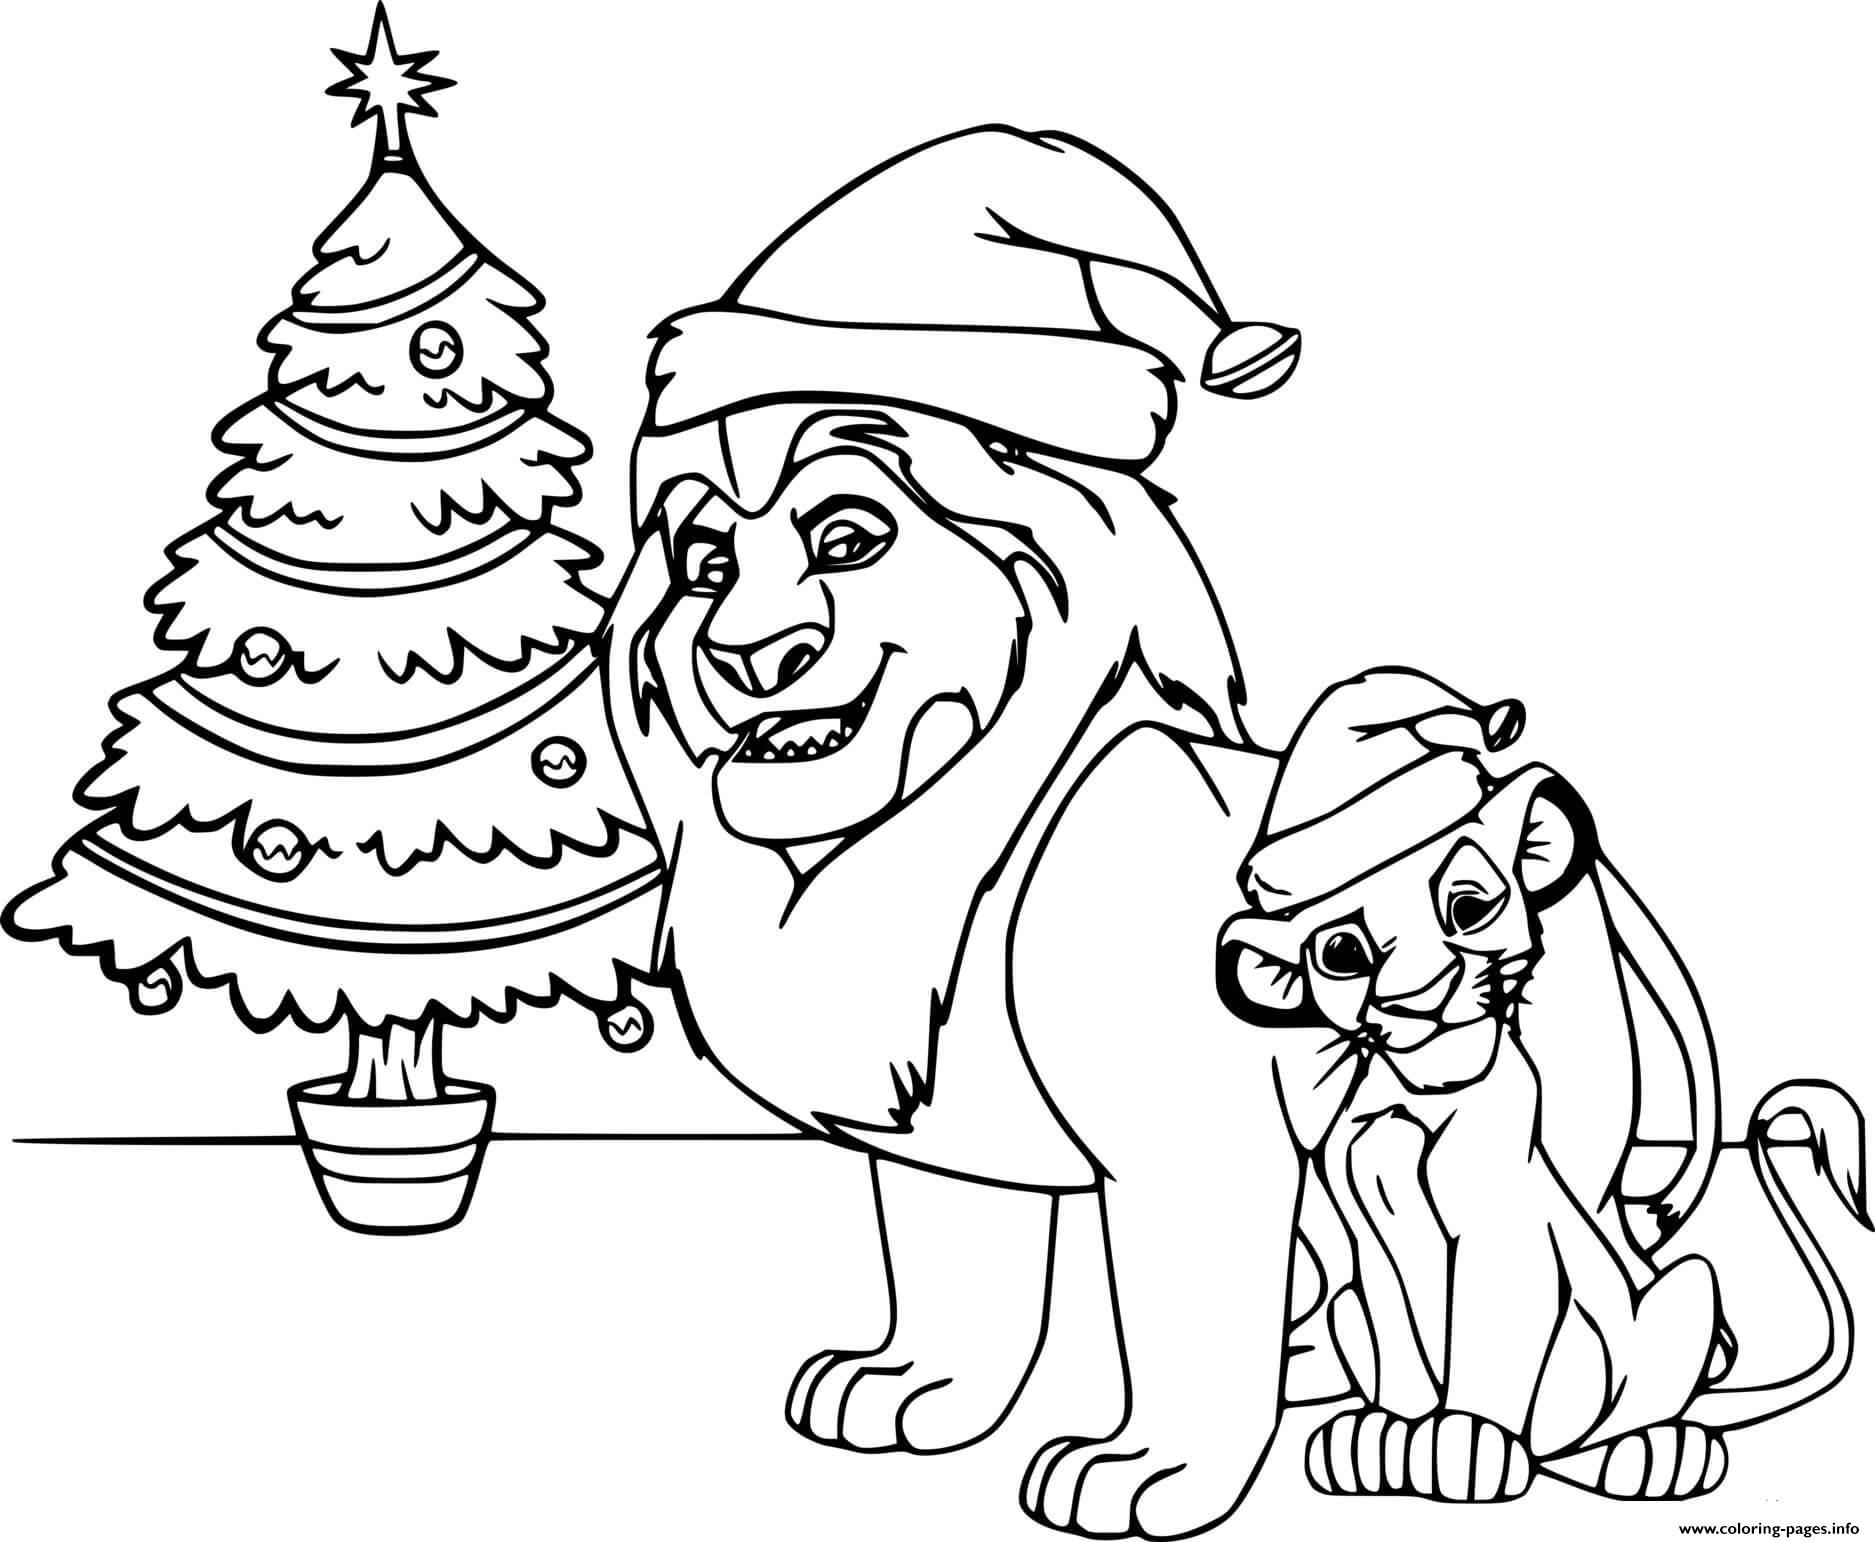 Lion King And Christmas Tree coloring